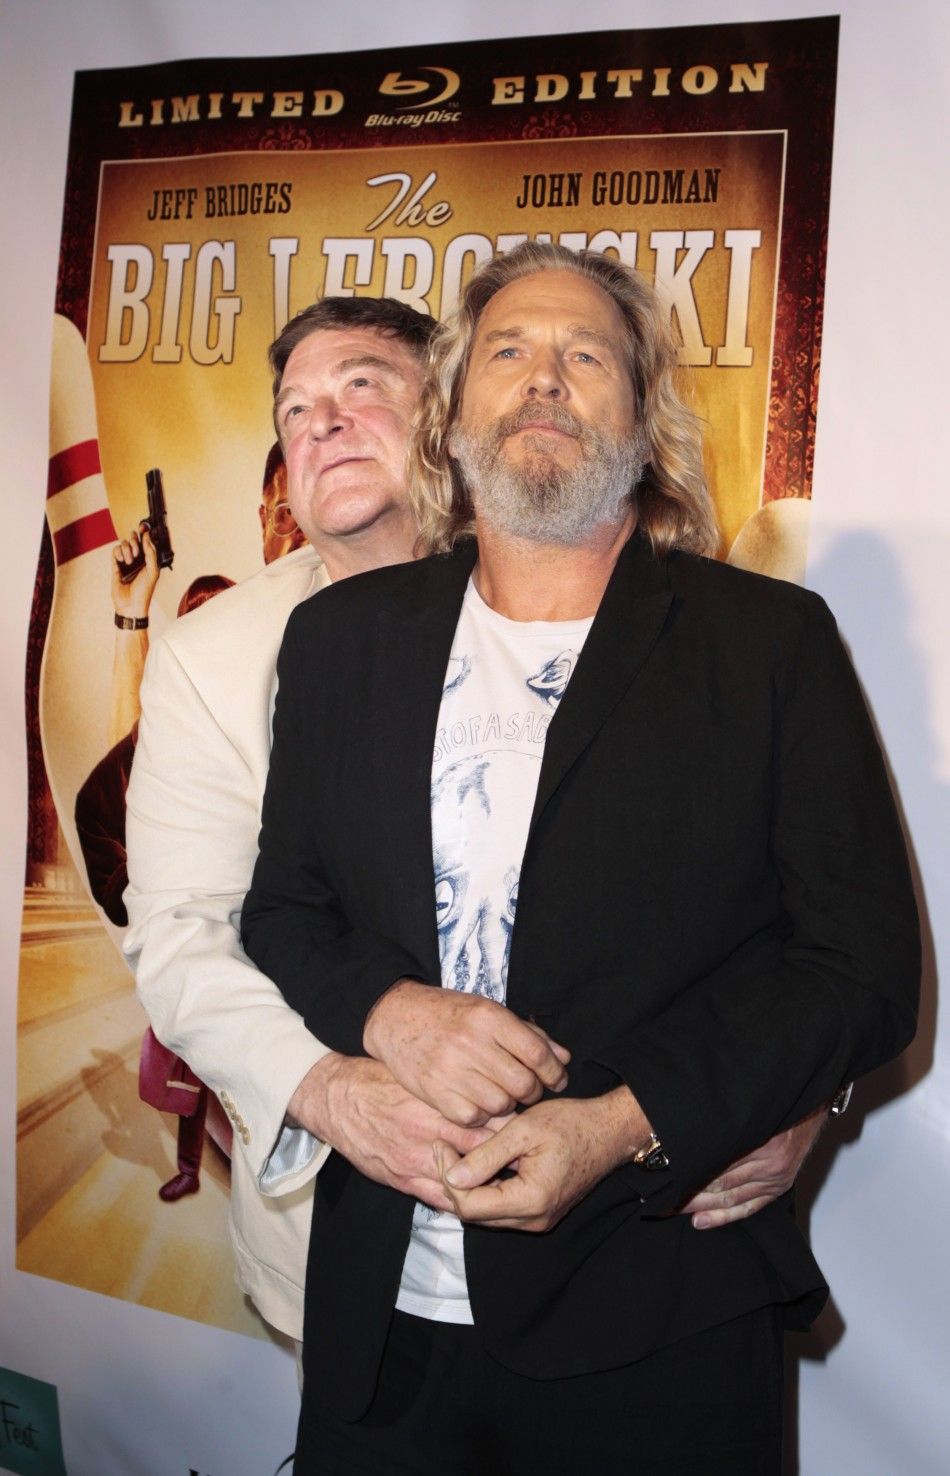 John Goodman and Jeff Bridges